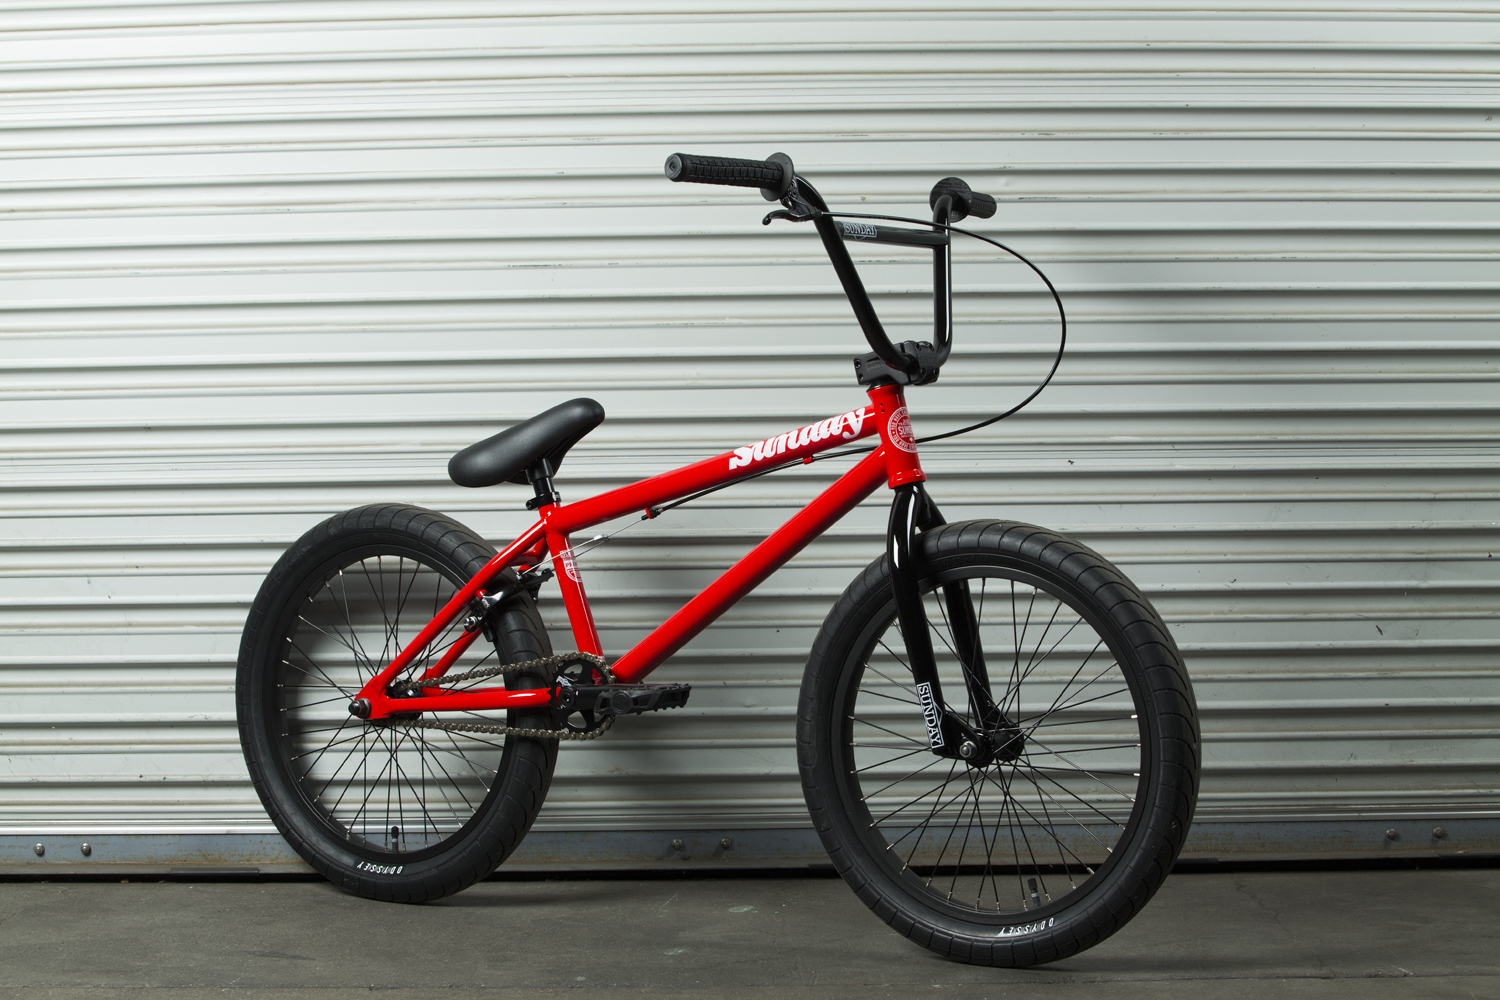 red and black bmx bike